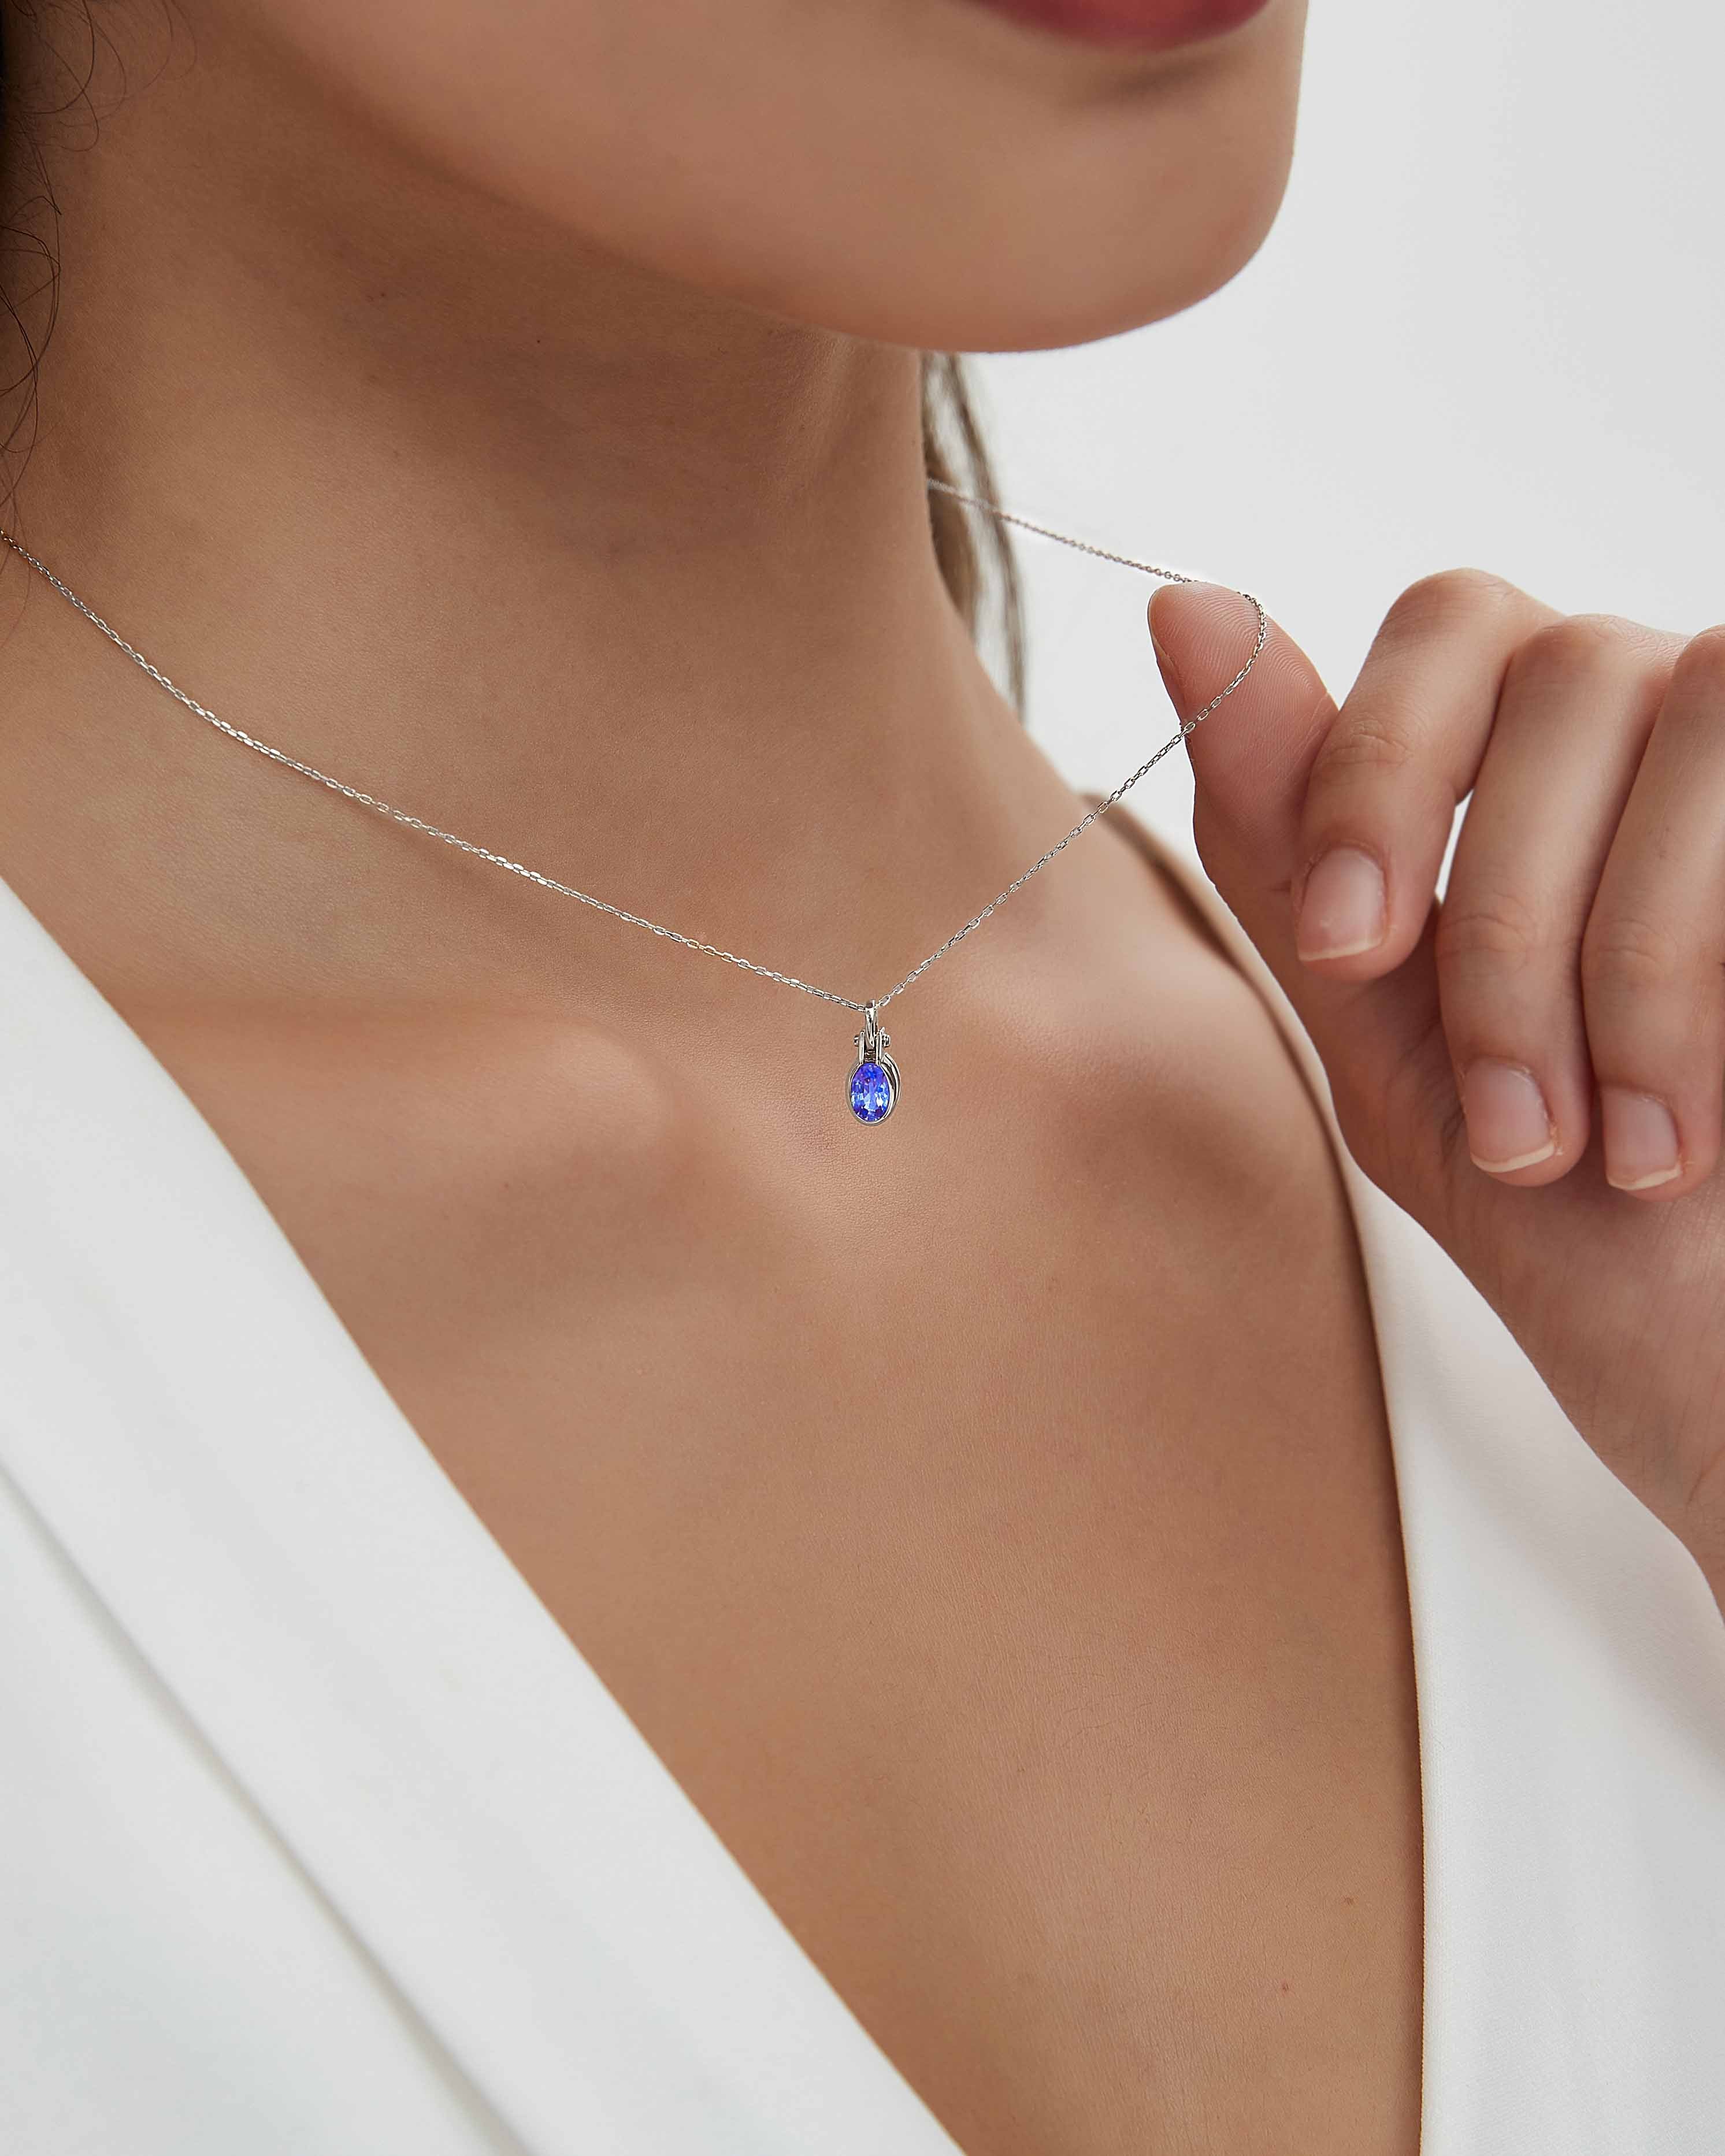 Luxury Ceylon Sapphire Necklace with Flower Petal design in 18K